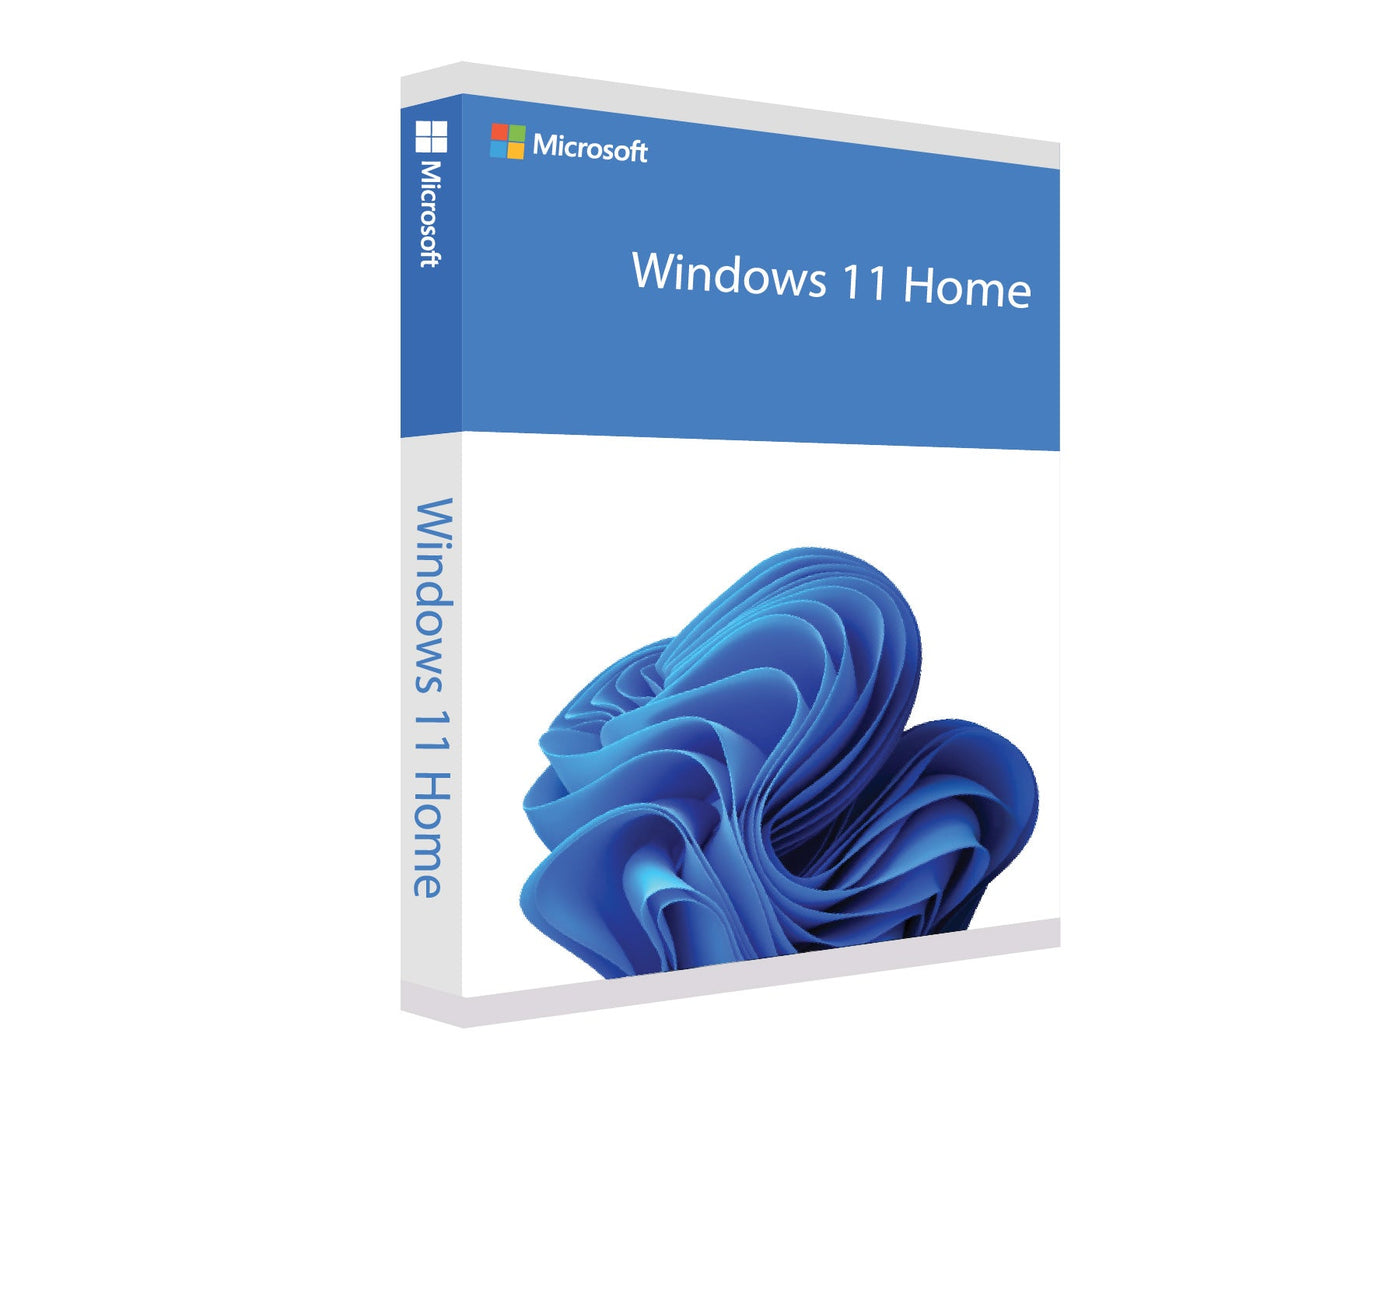 #Windows 11 Home